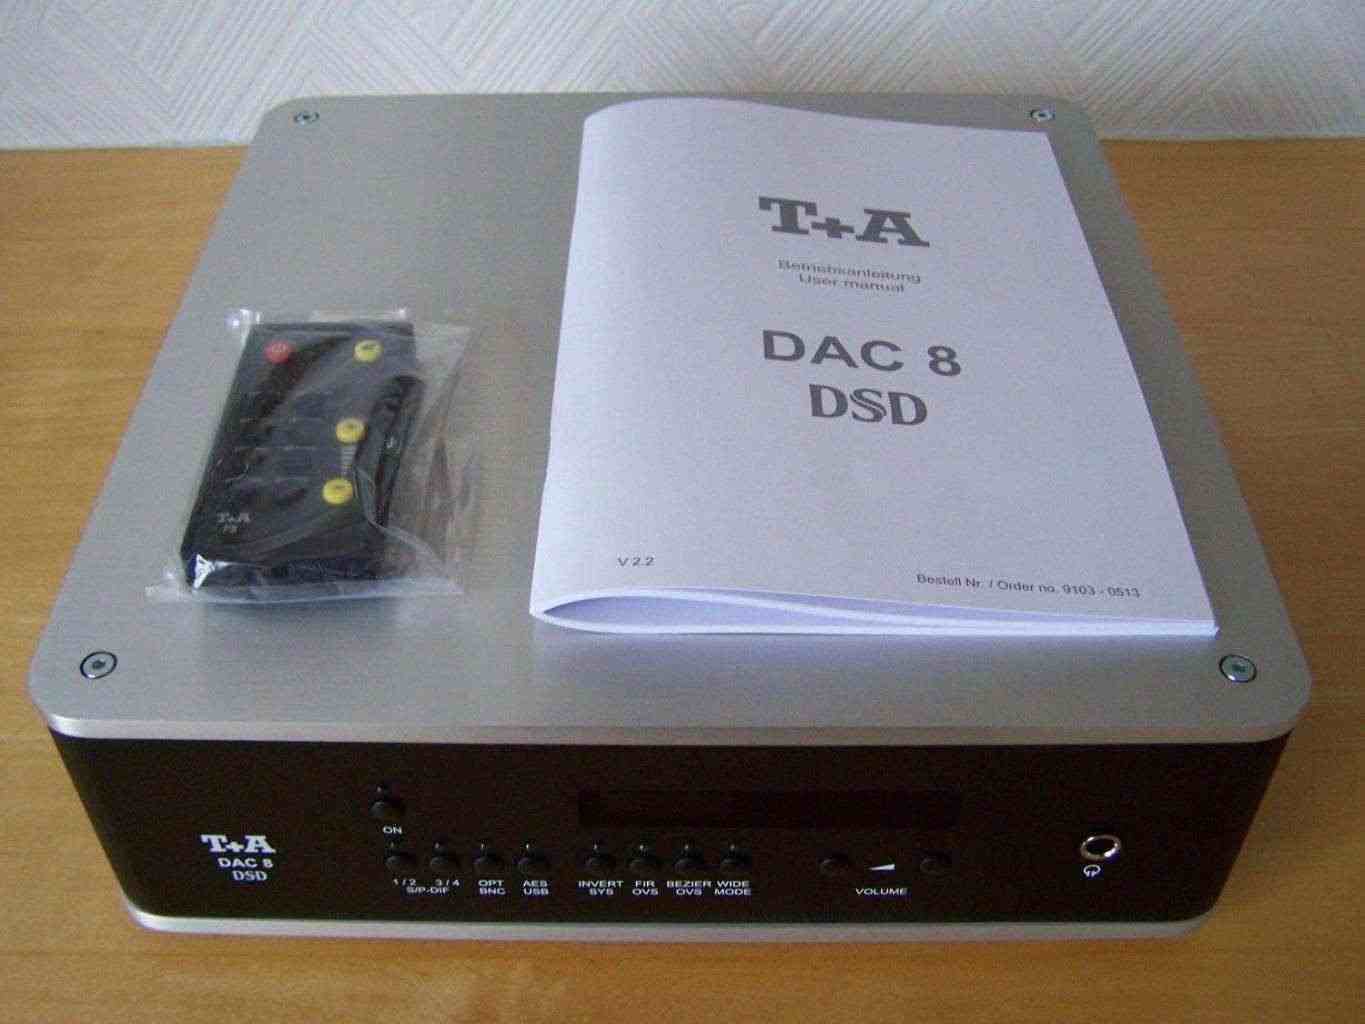 T+A DAC 8 DSD DIGITAL TO ANALOGUE CONVERTER